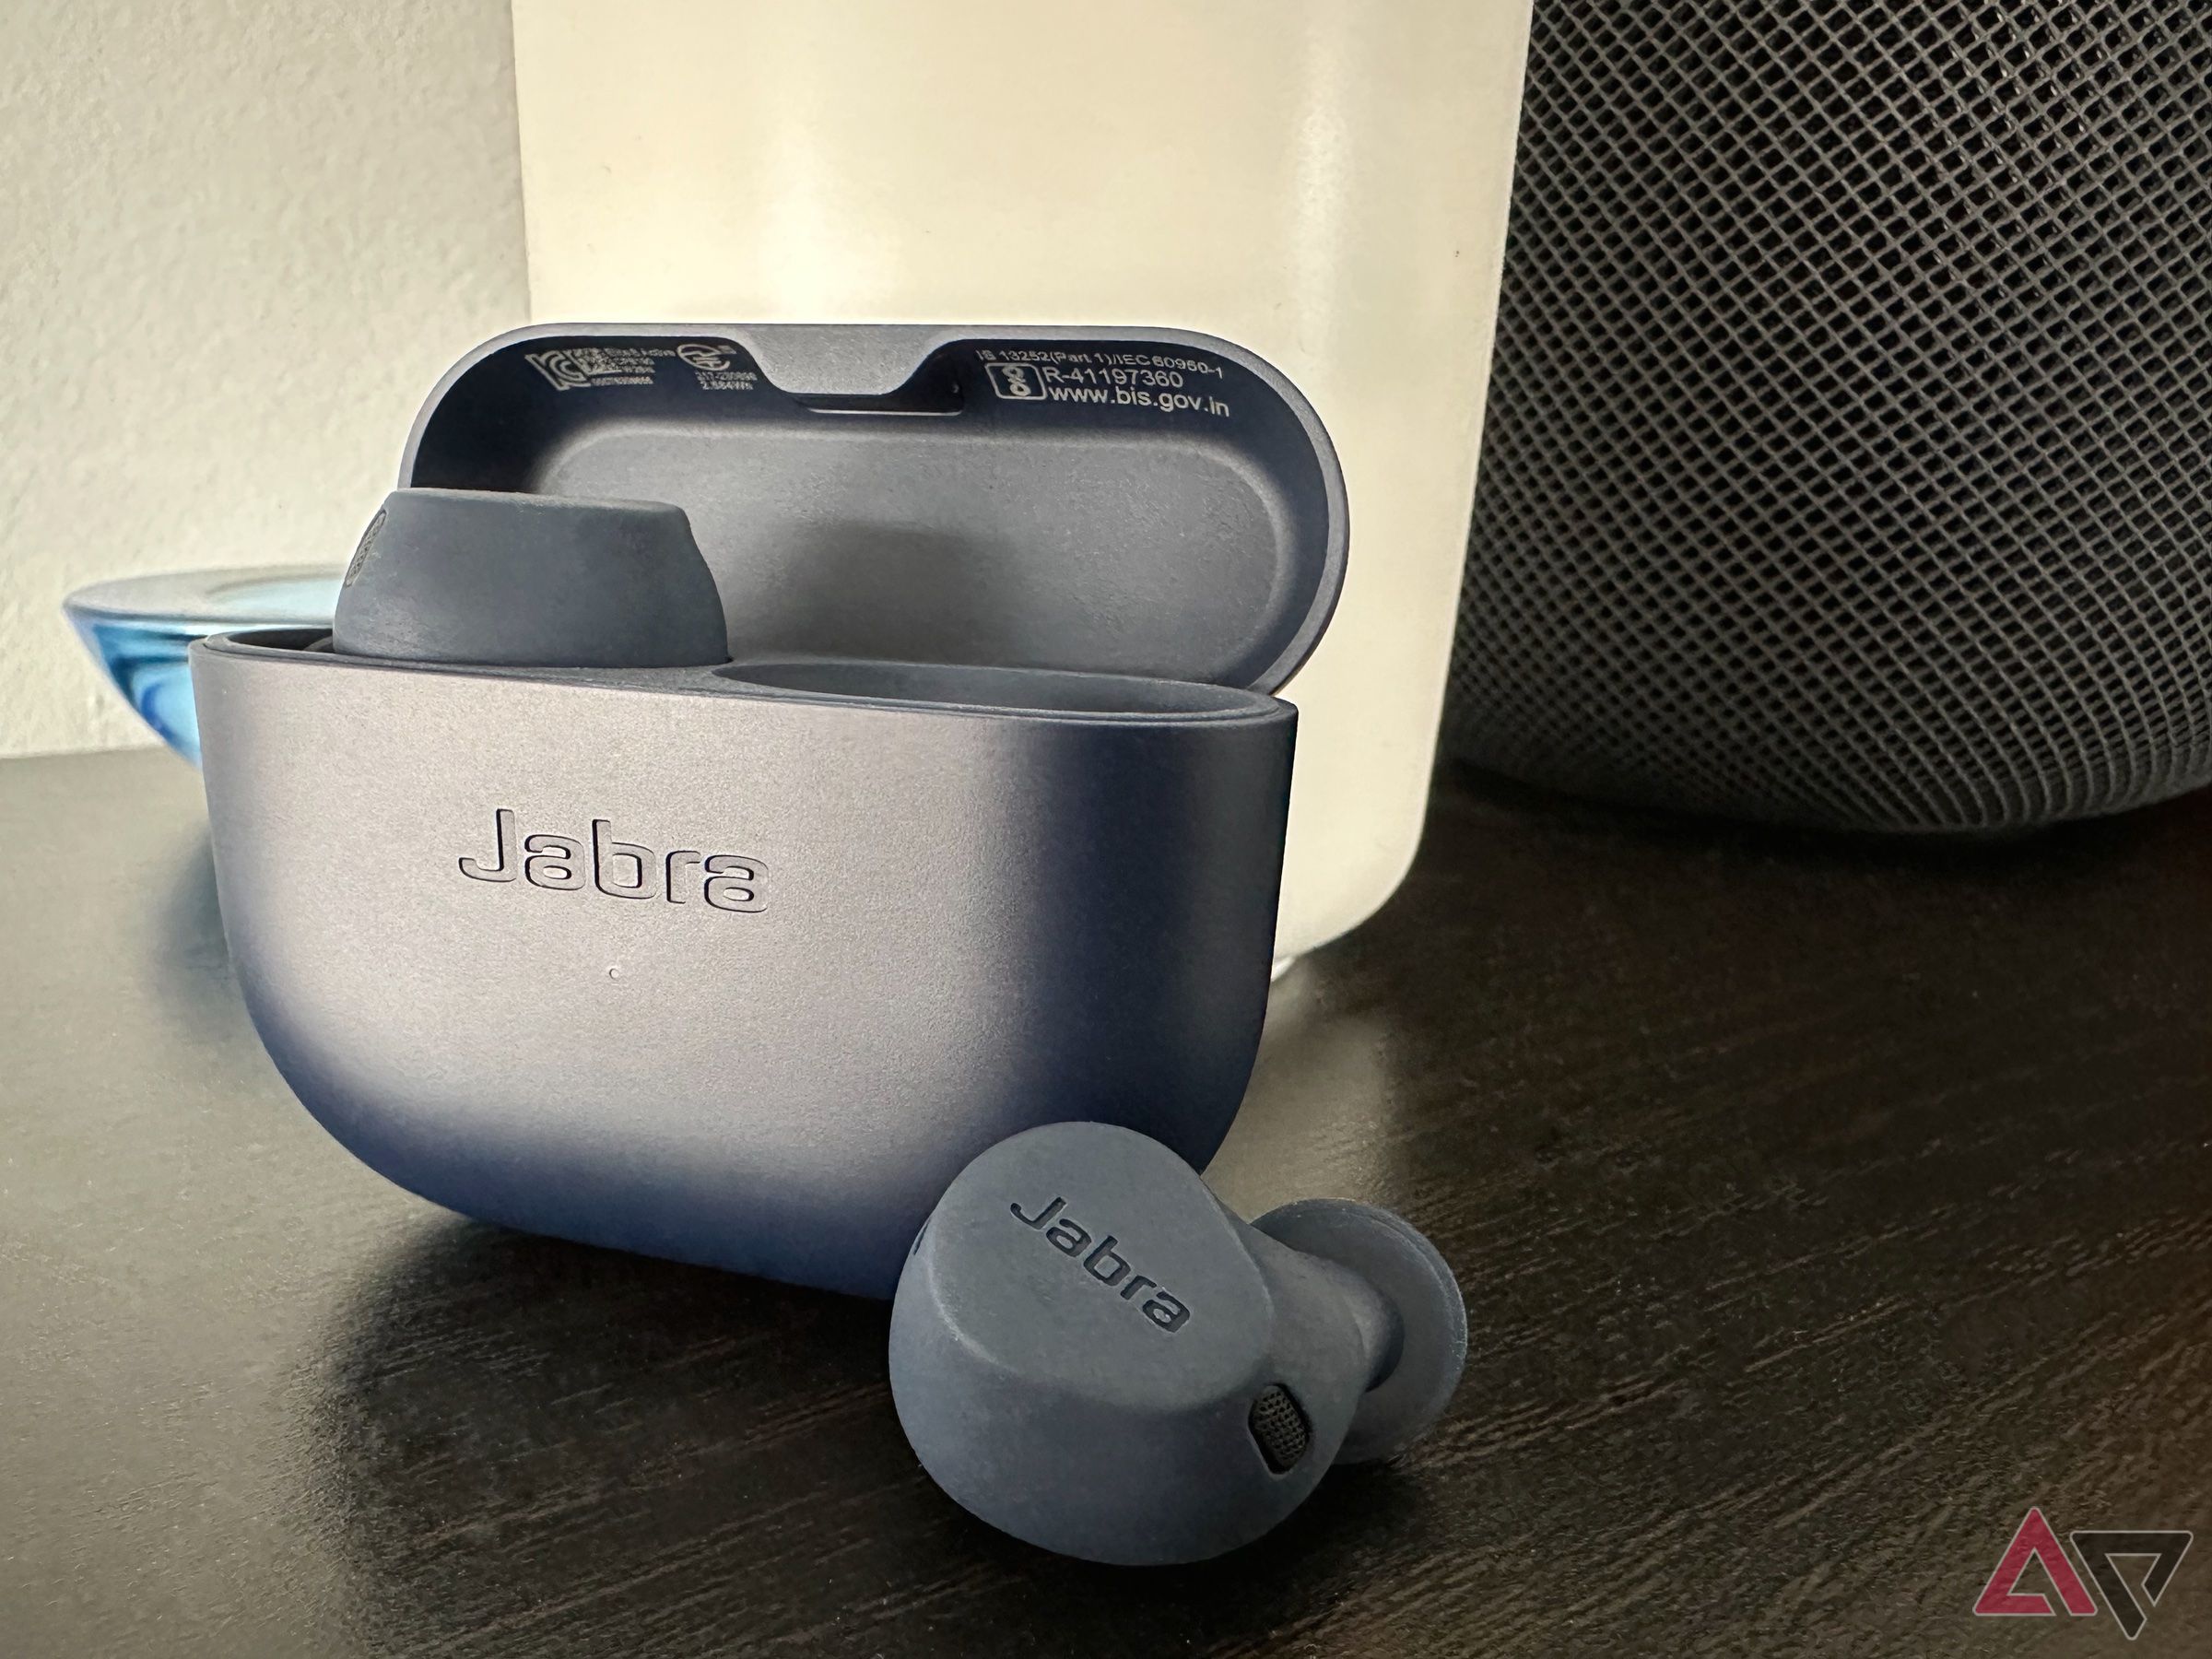 Jabra Elite 8 Active earbuds with case